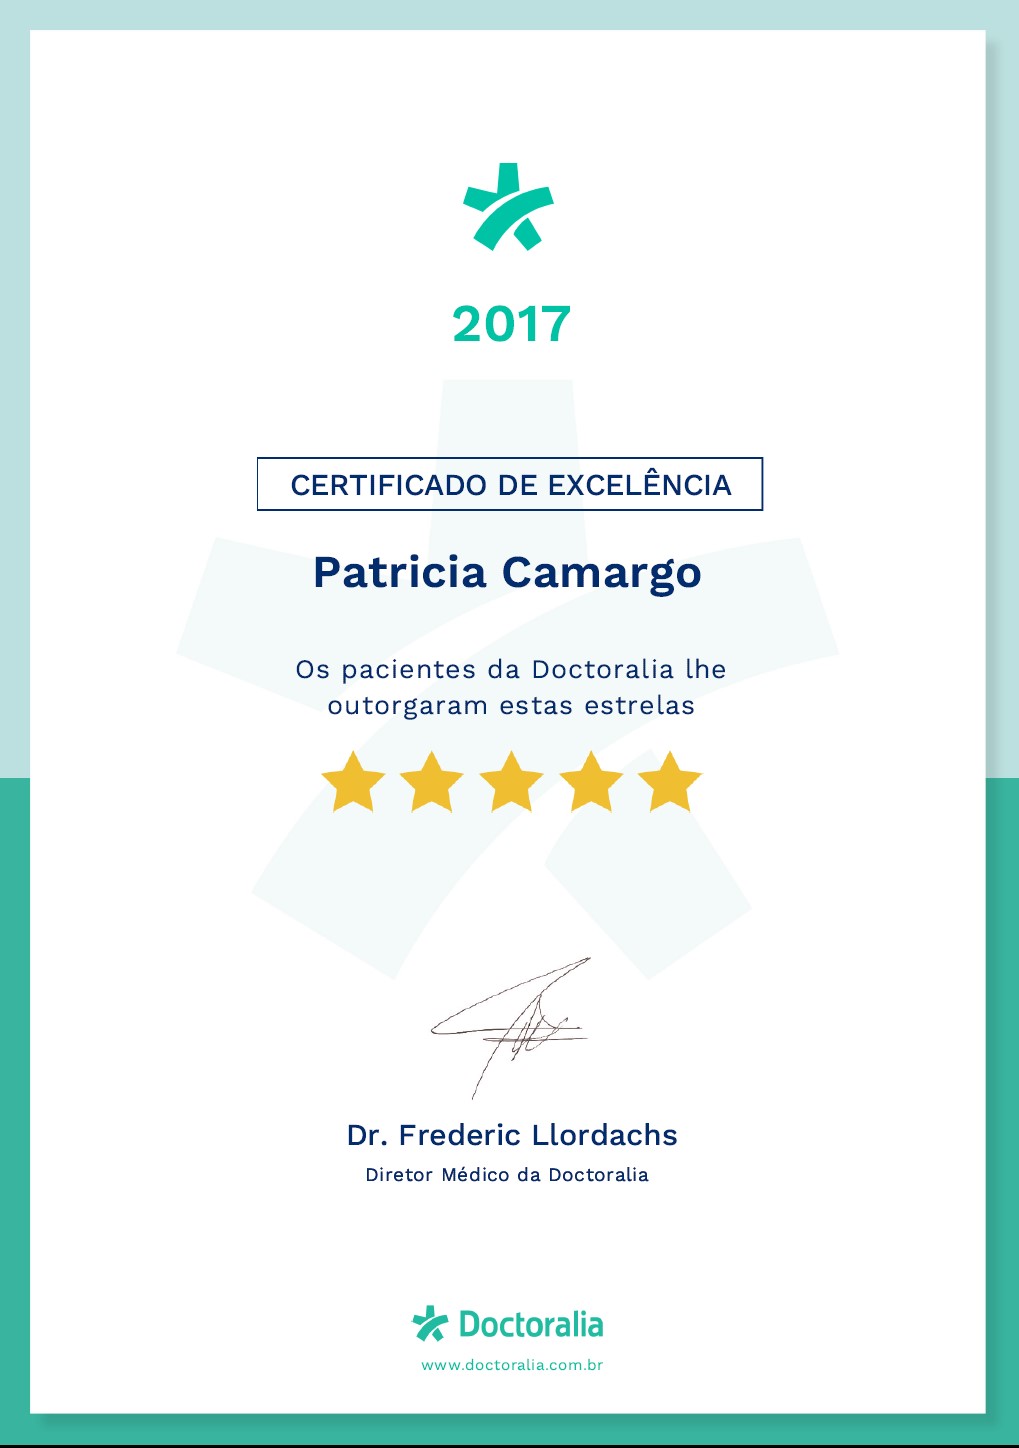 Certificado de Excelência Doctoralia 2017